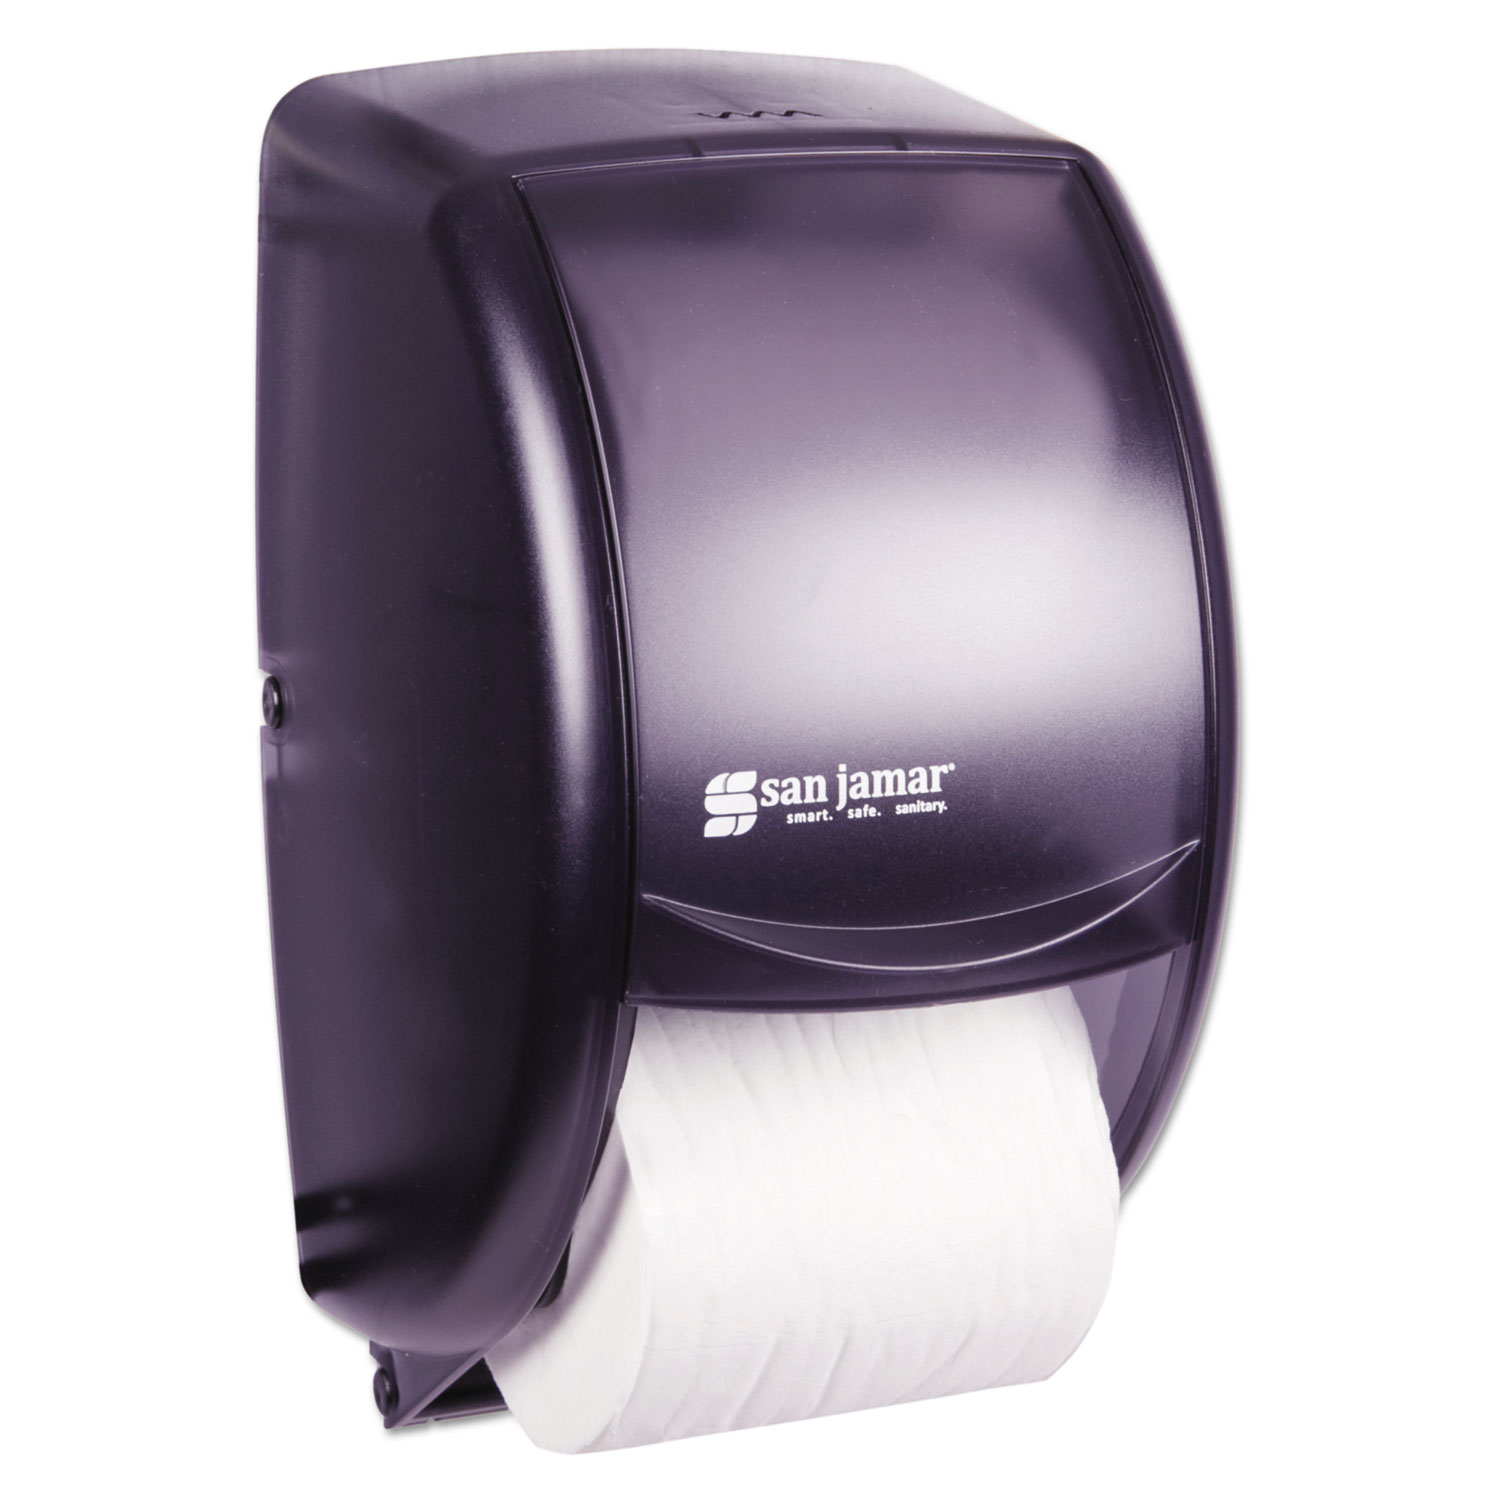  San Jamar SAN R3500TBK Duett Standard Bath Tissue Dispenser, 2 Roll, 7 1/2w x 7d x 12 3/4h, Black Pearl (SJMR3500TBK) 